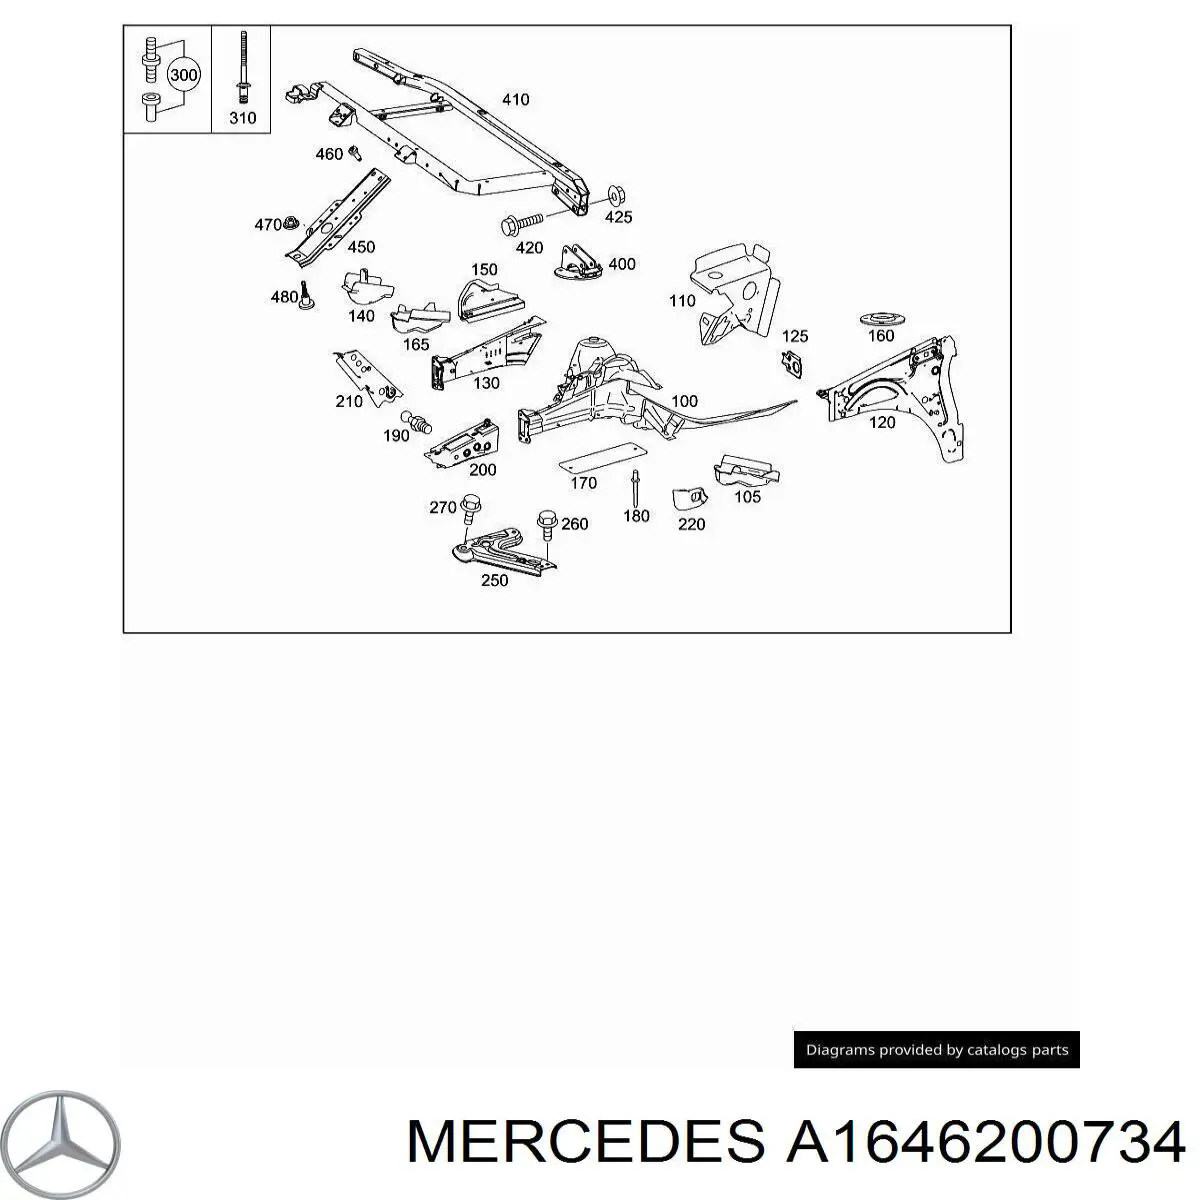 A1646200734 Mercedes arco de rueda, panel lateral, izquierdo